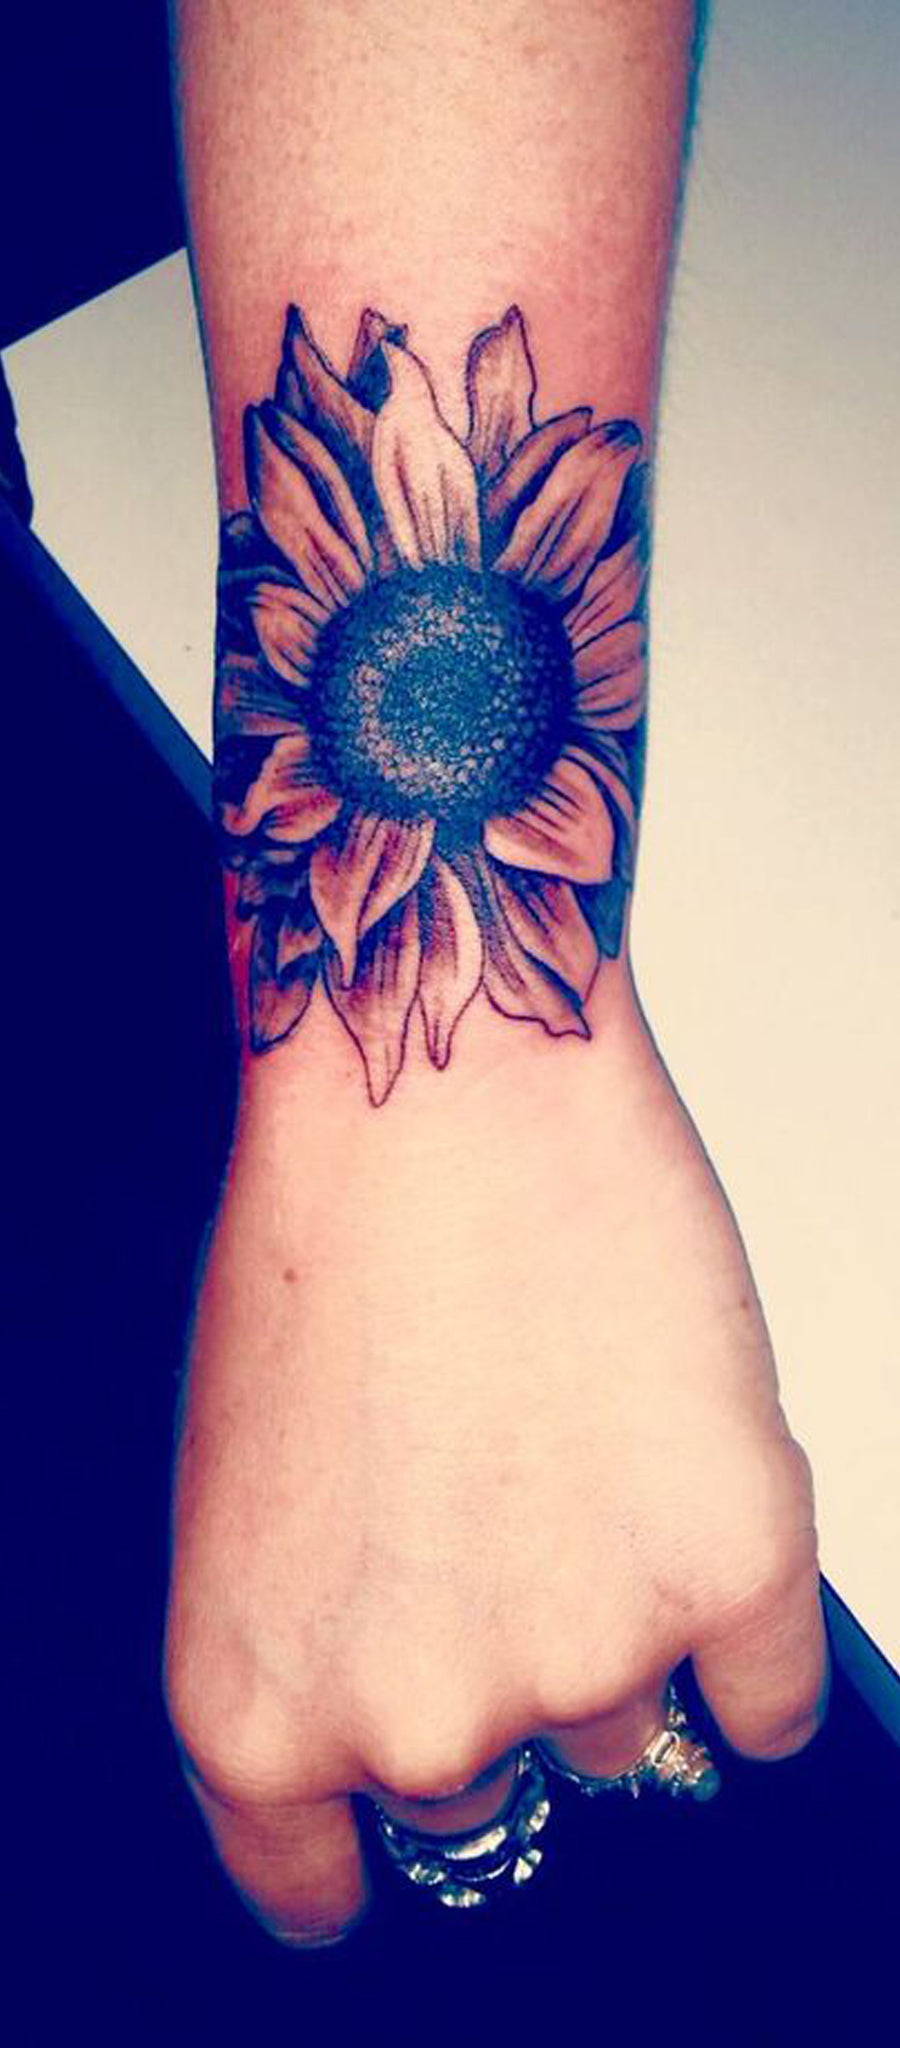 Cool Sunflower Arm Tattoo Ideas for Women - Realistic Beautiful Flower Forearm Tat - www.MyBodiArt.com #tattoos